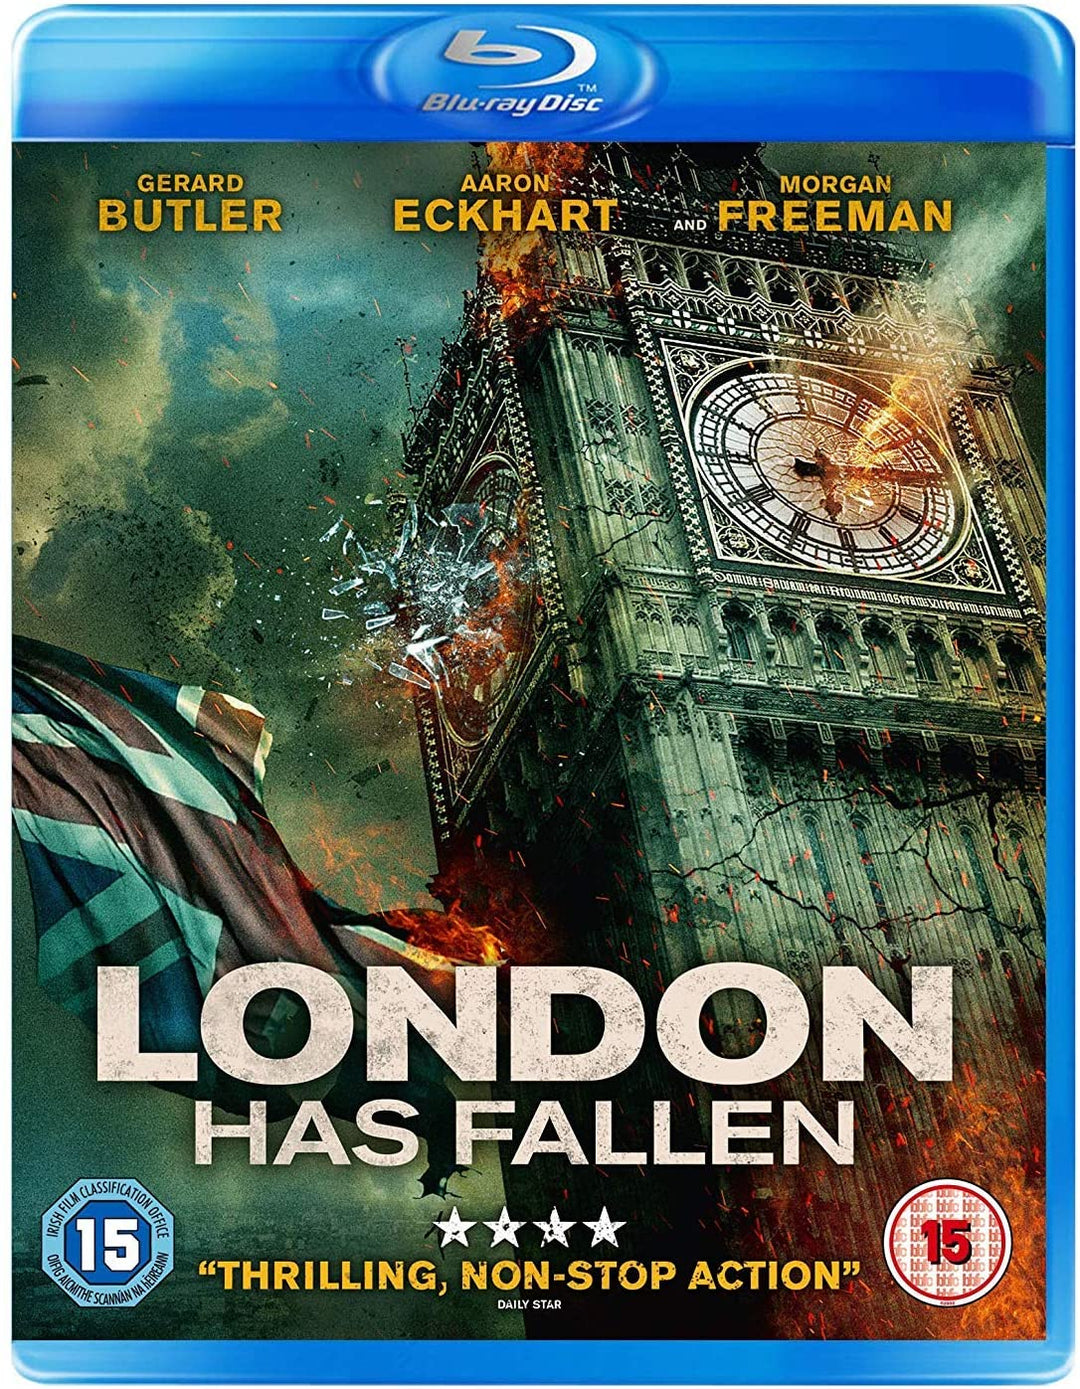 London Has Fallen - Action [Blu-ray]